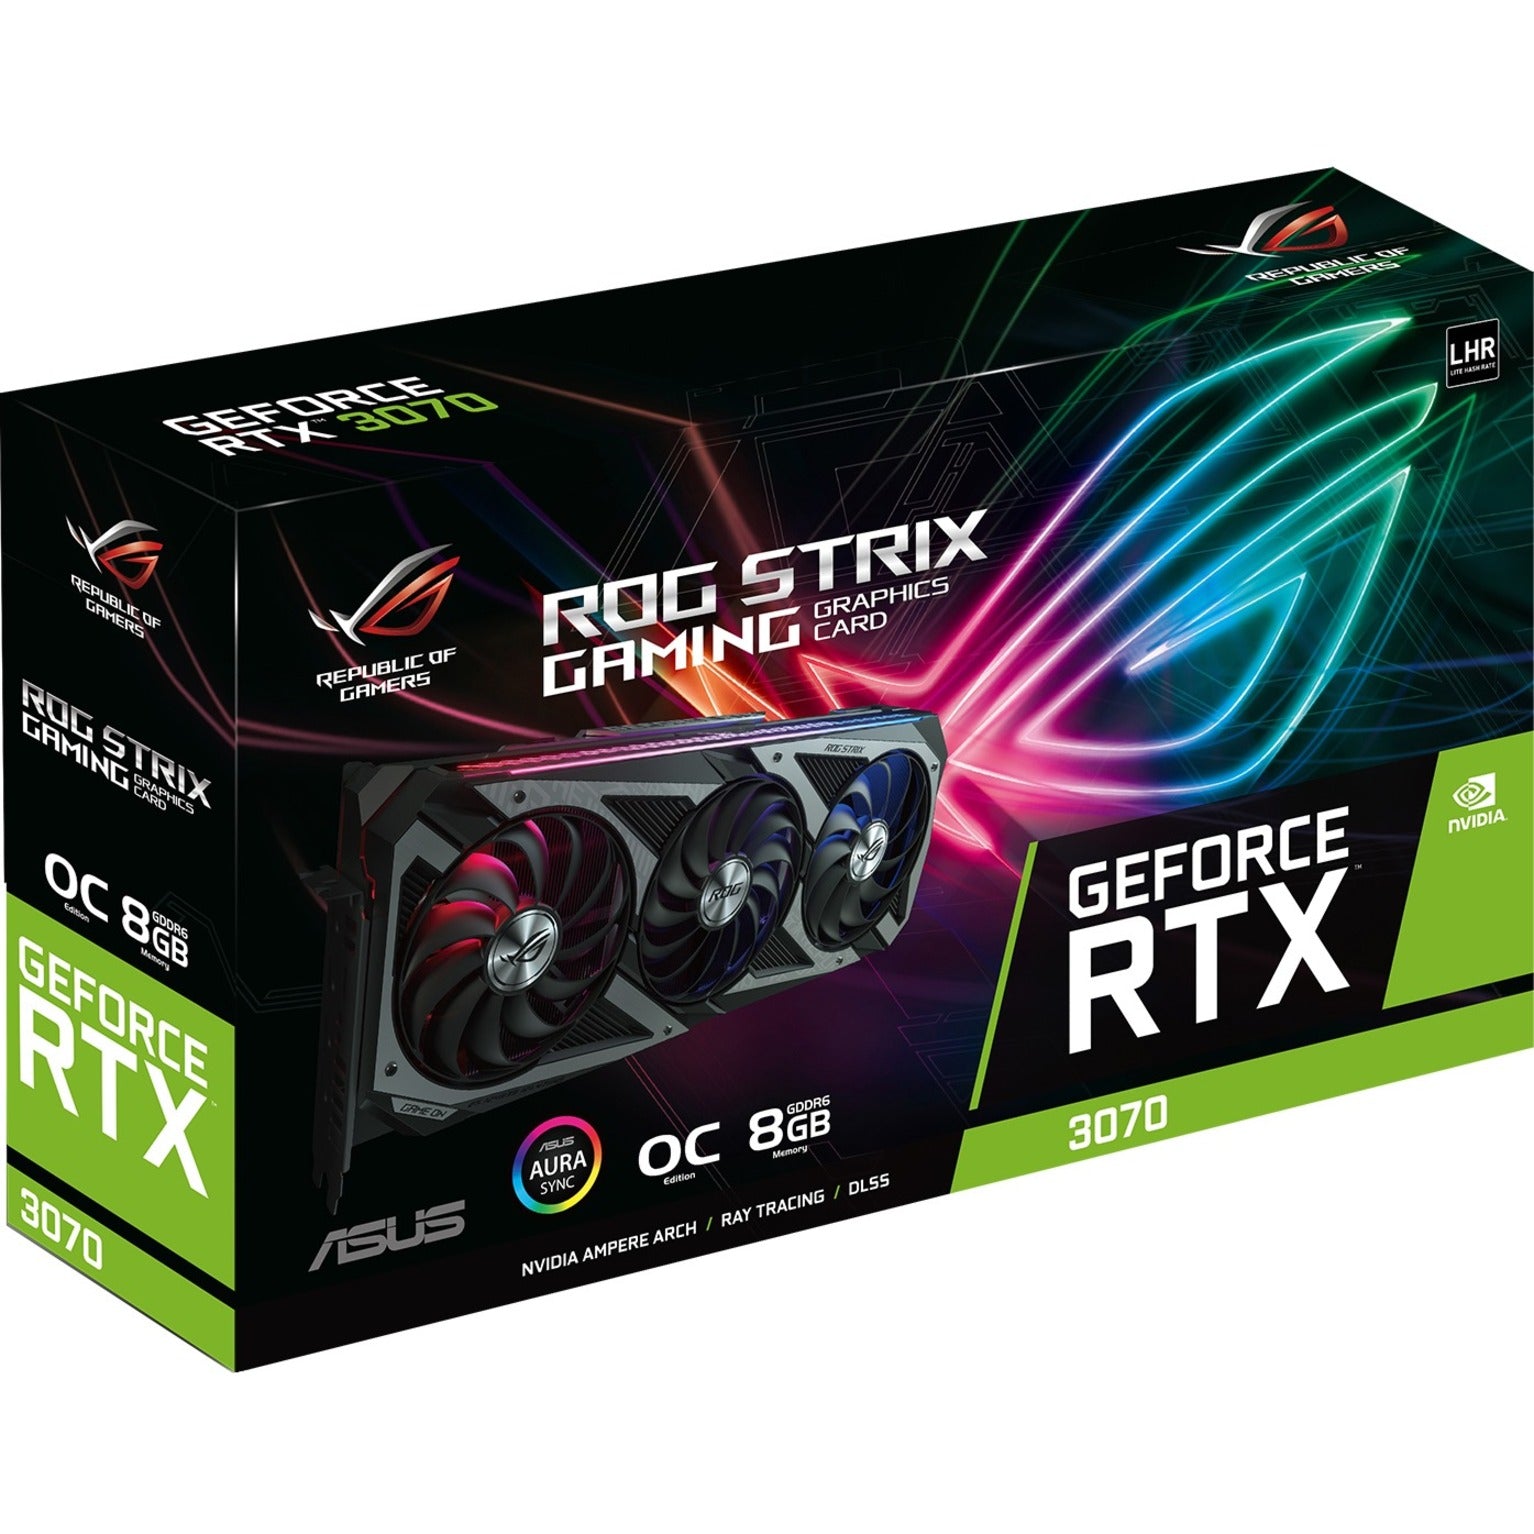 Asus ROG ROG-STRIX-RTX3070-O8G-V2-GAMING Strix GeForce RTX 3070 V2 OC Edition Graphic Card, 8GB GDDR6, DirectX 12 Ultimate, OpenGL 4.6